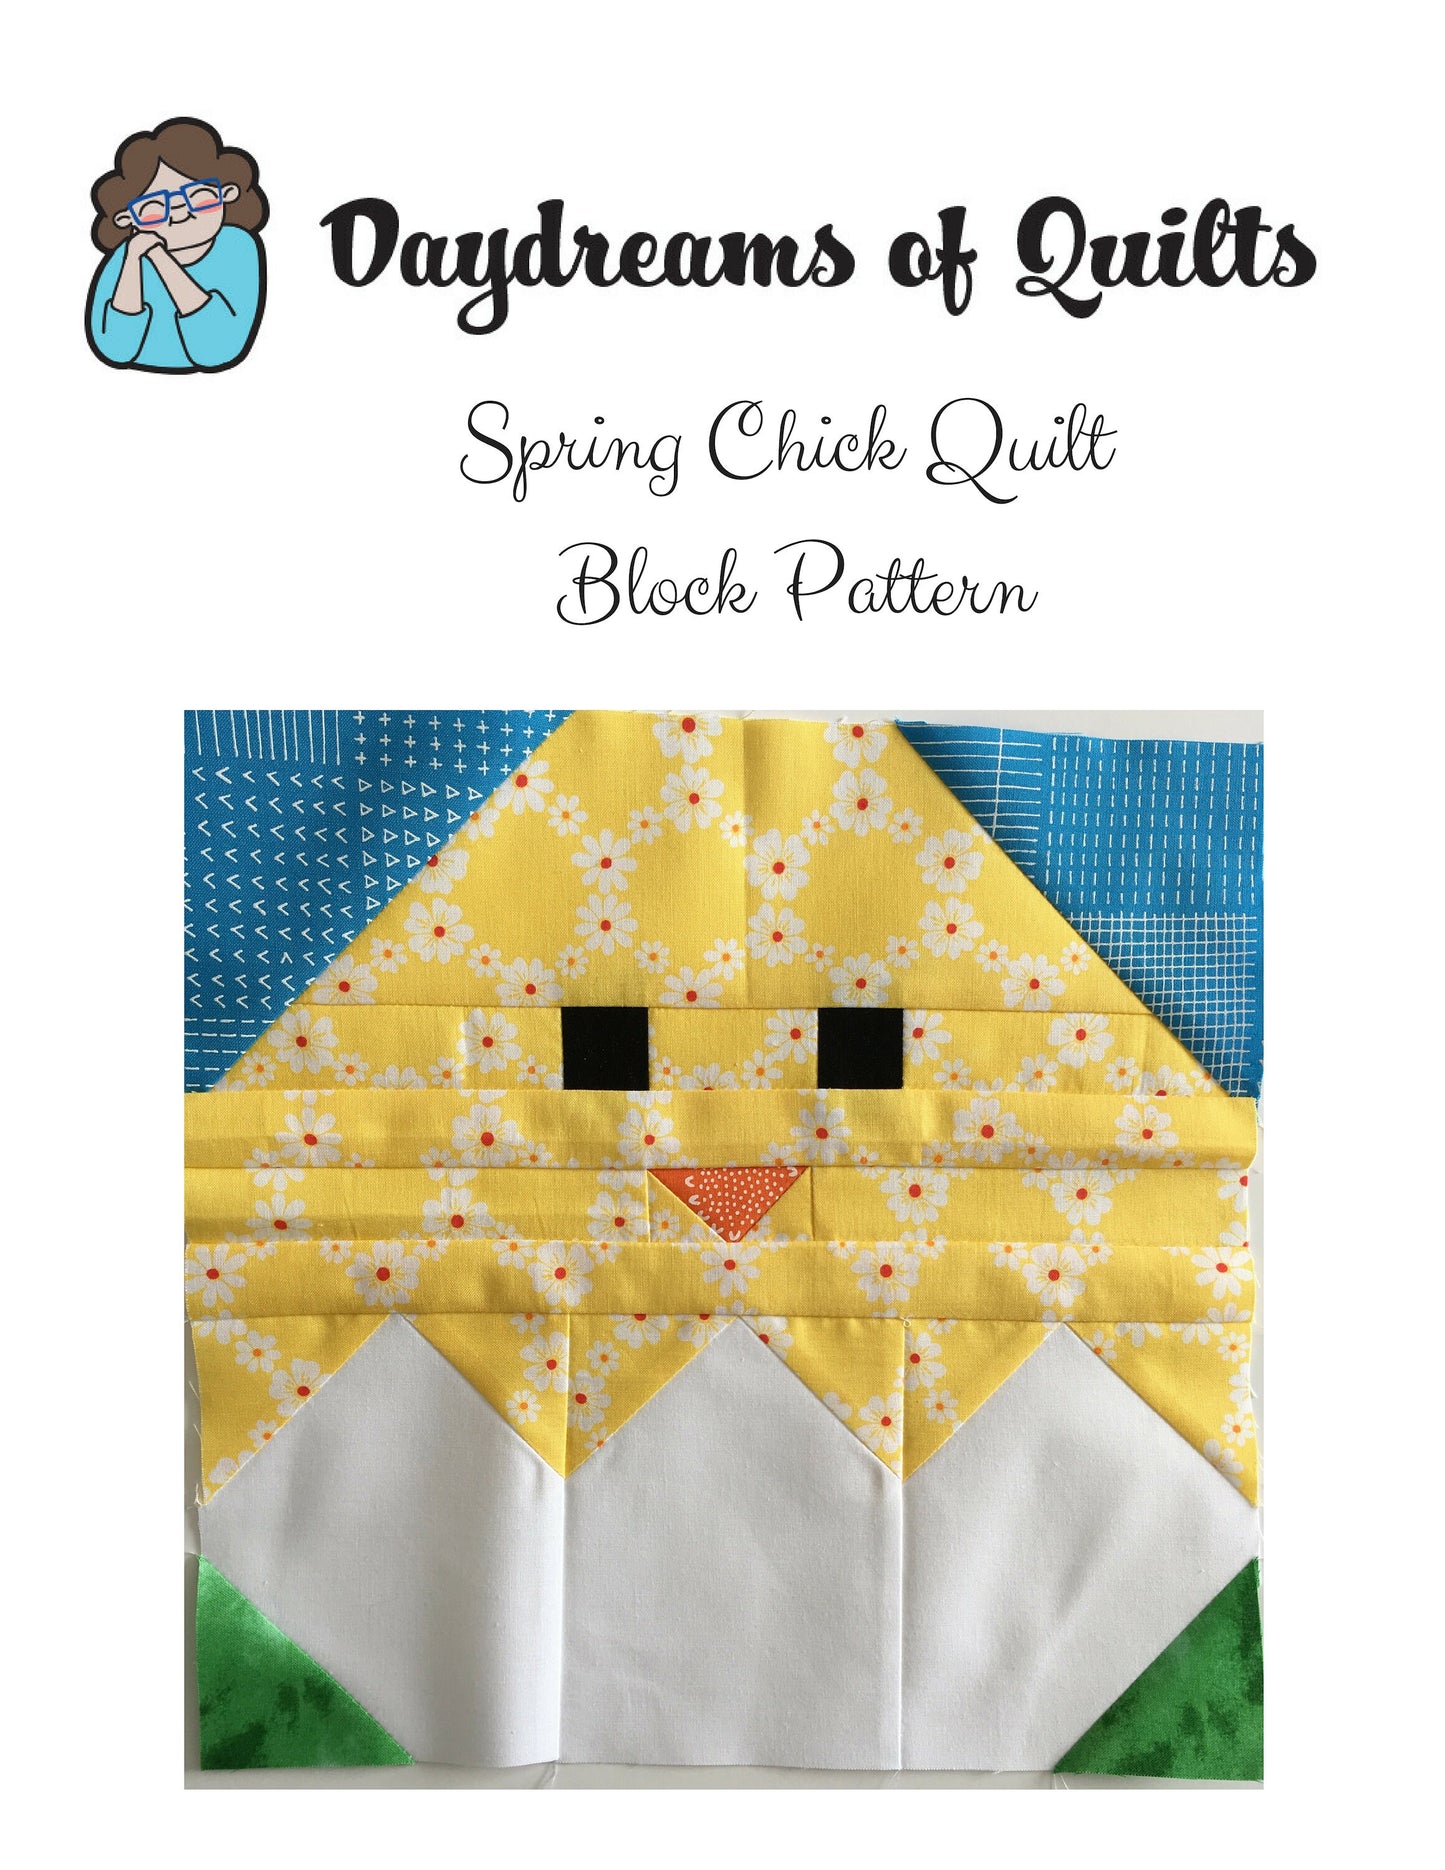 Spring Chick Quilt Block Pattern, digital quilt block PDF pattern